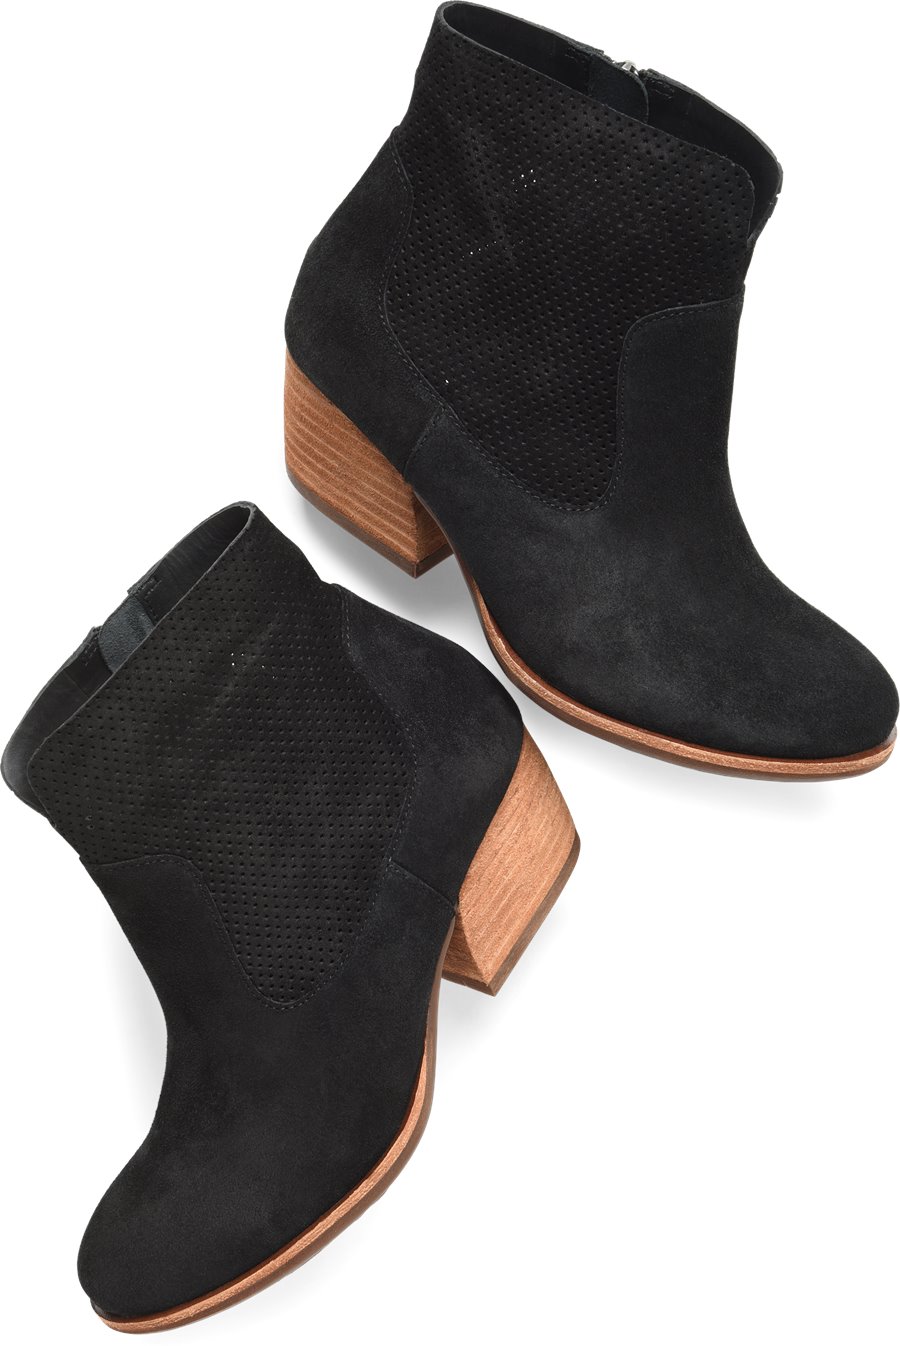 Korkease Shoes - Korkease Sherrill Women's Shoes in Black Suede color. - #korkeaseshoes #blackshoes